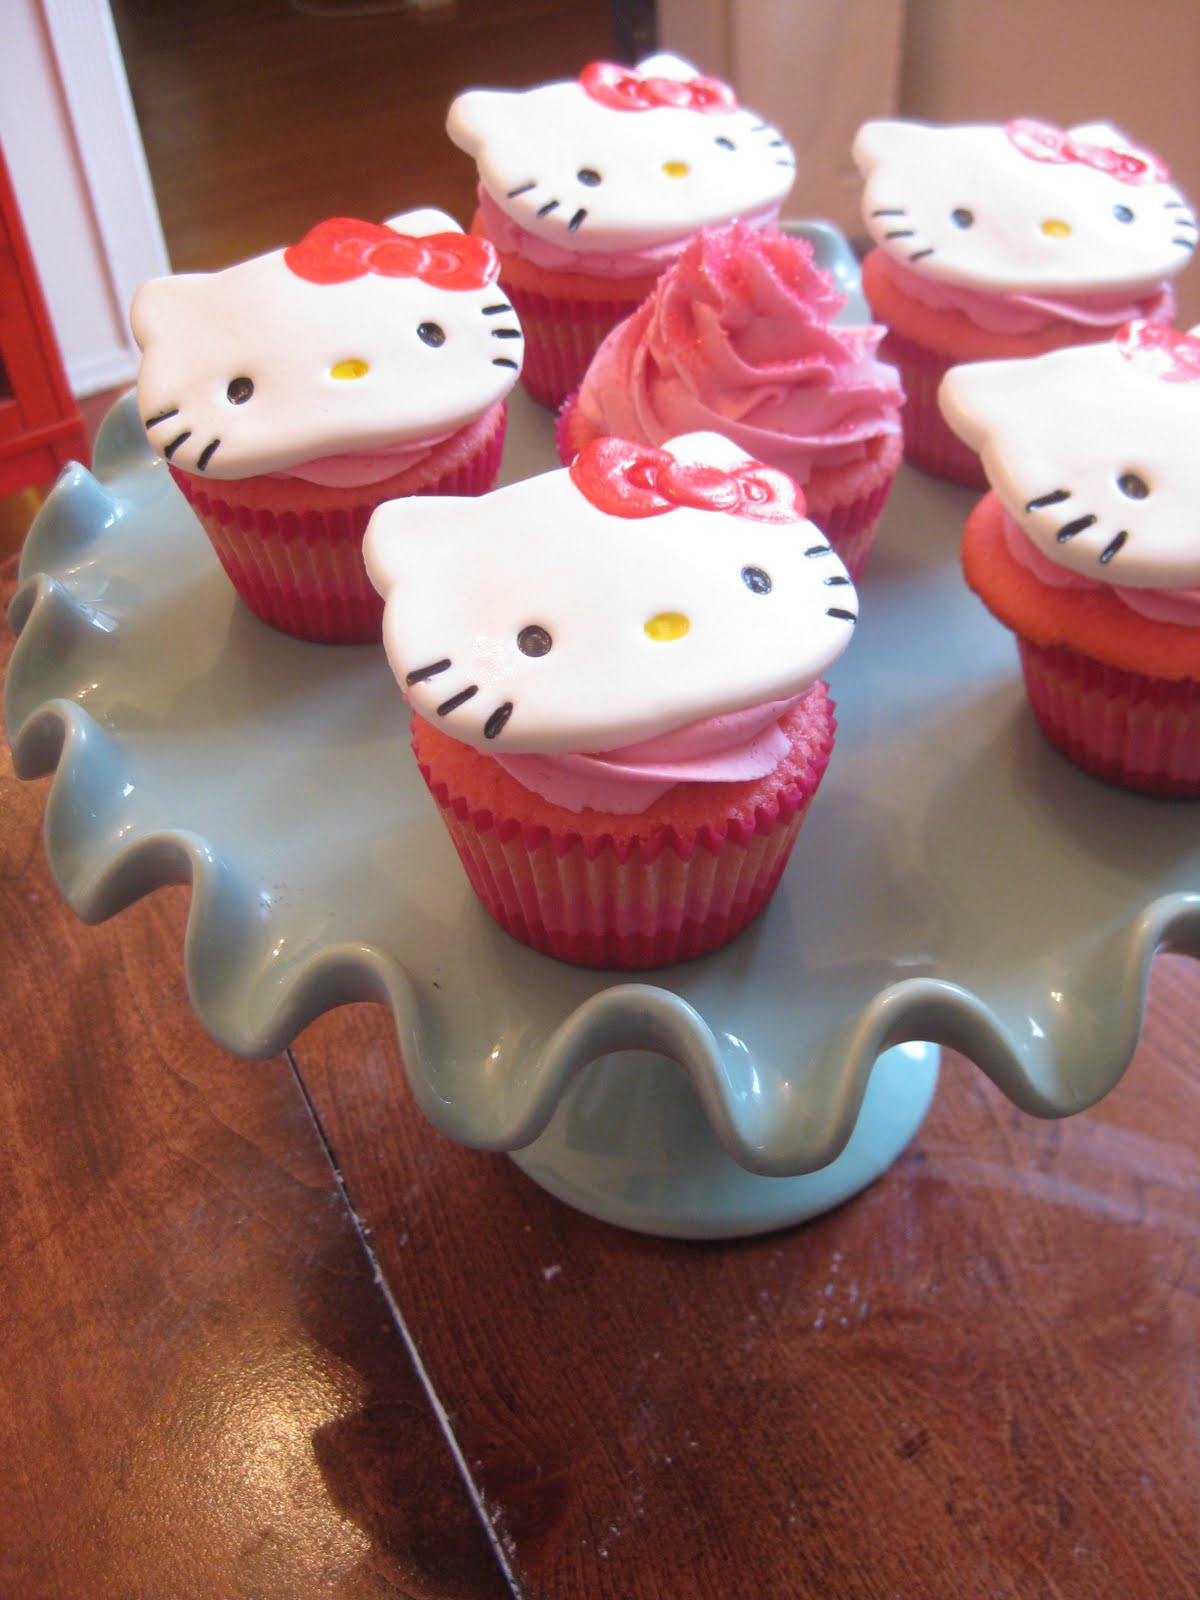 Red Velvet Cupcakes - Hello Kitty! - Food Gypsy